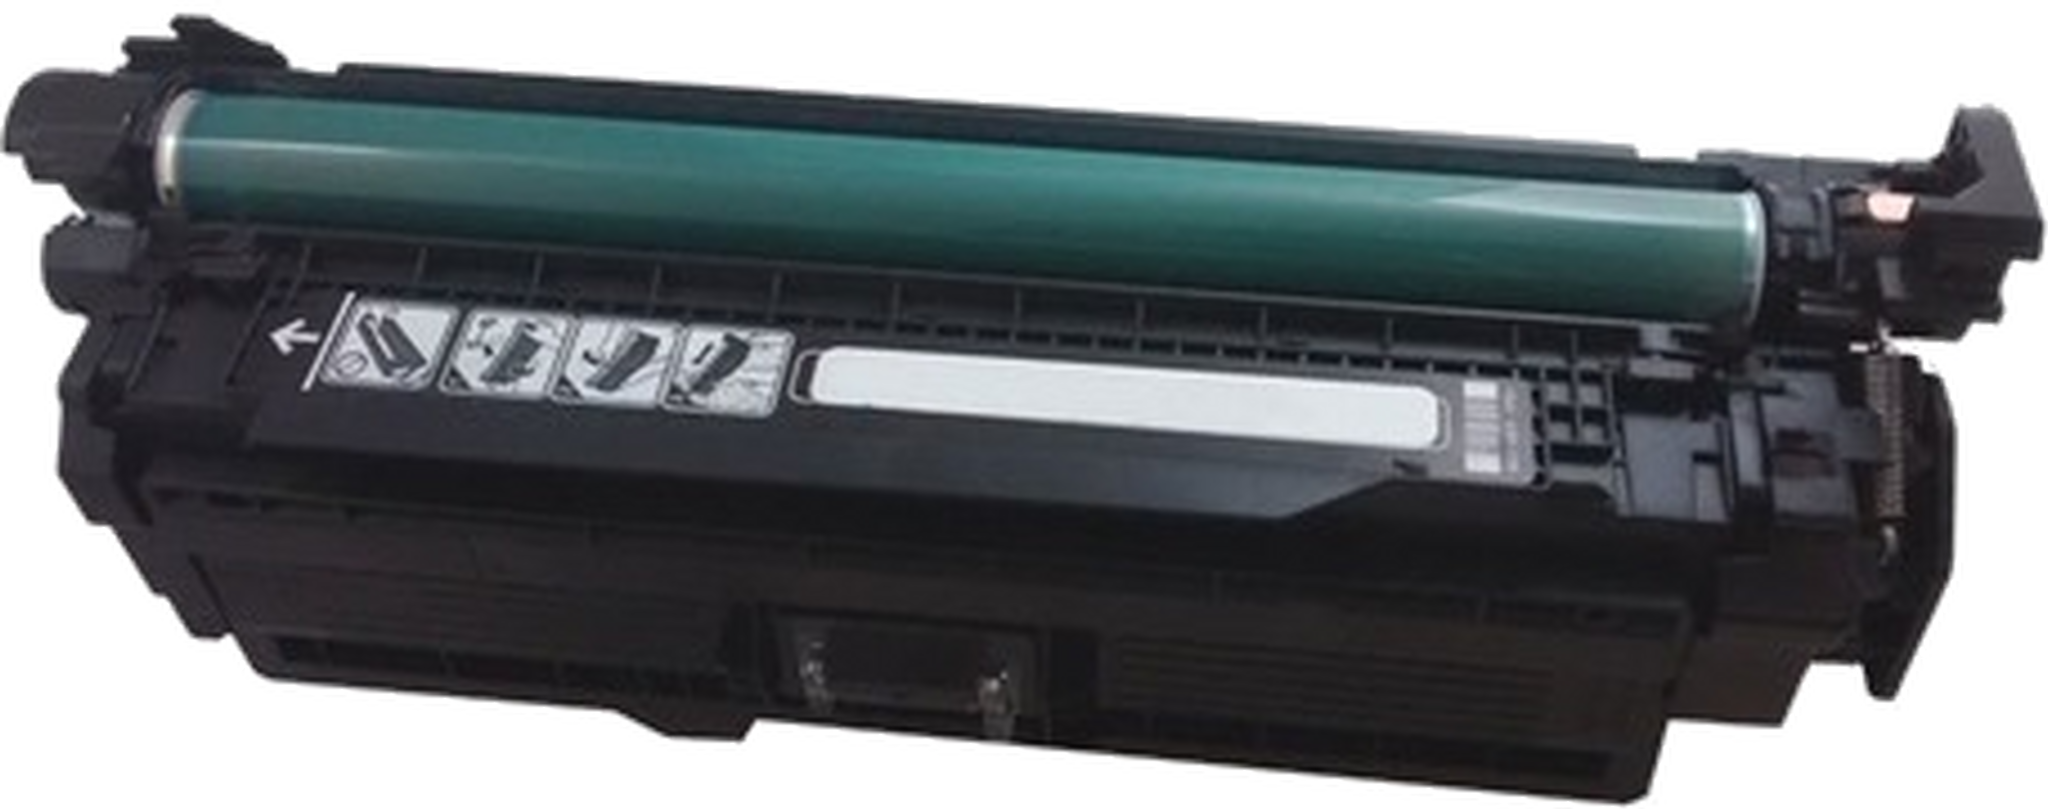 HP 507A LaserJet Toner Cartridge - Black (CE400A)